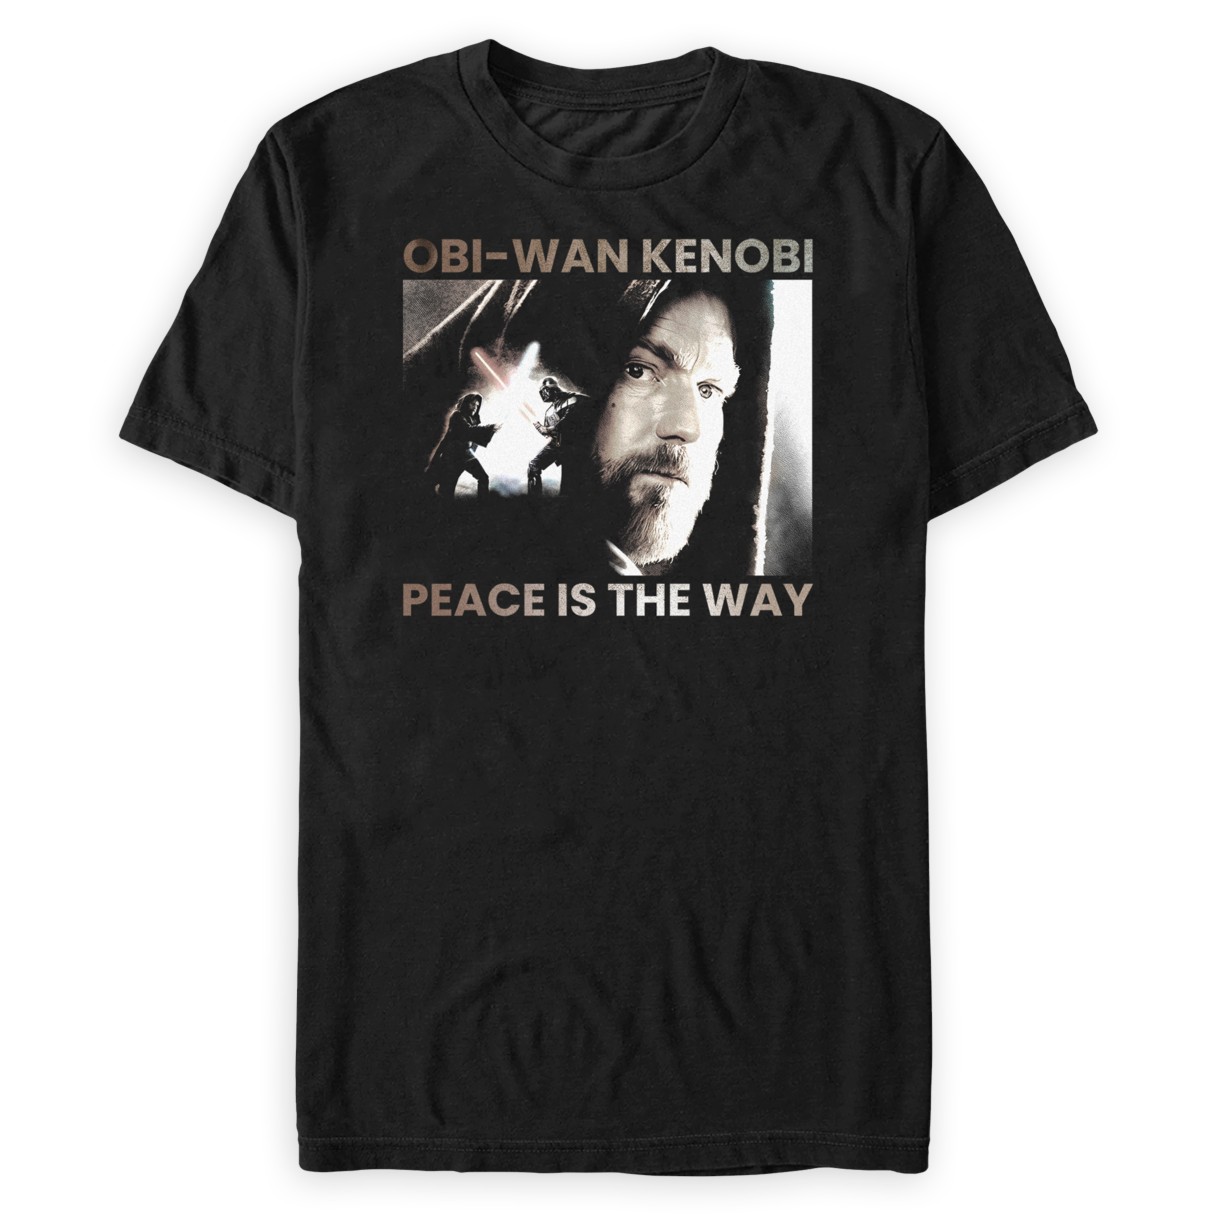 Obi-Wan Kenobi ''Peace'' T-Shirt for Adults – Star Wars: Obi-Wan Kenobi